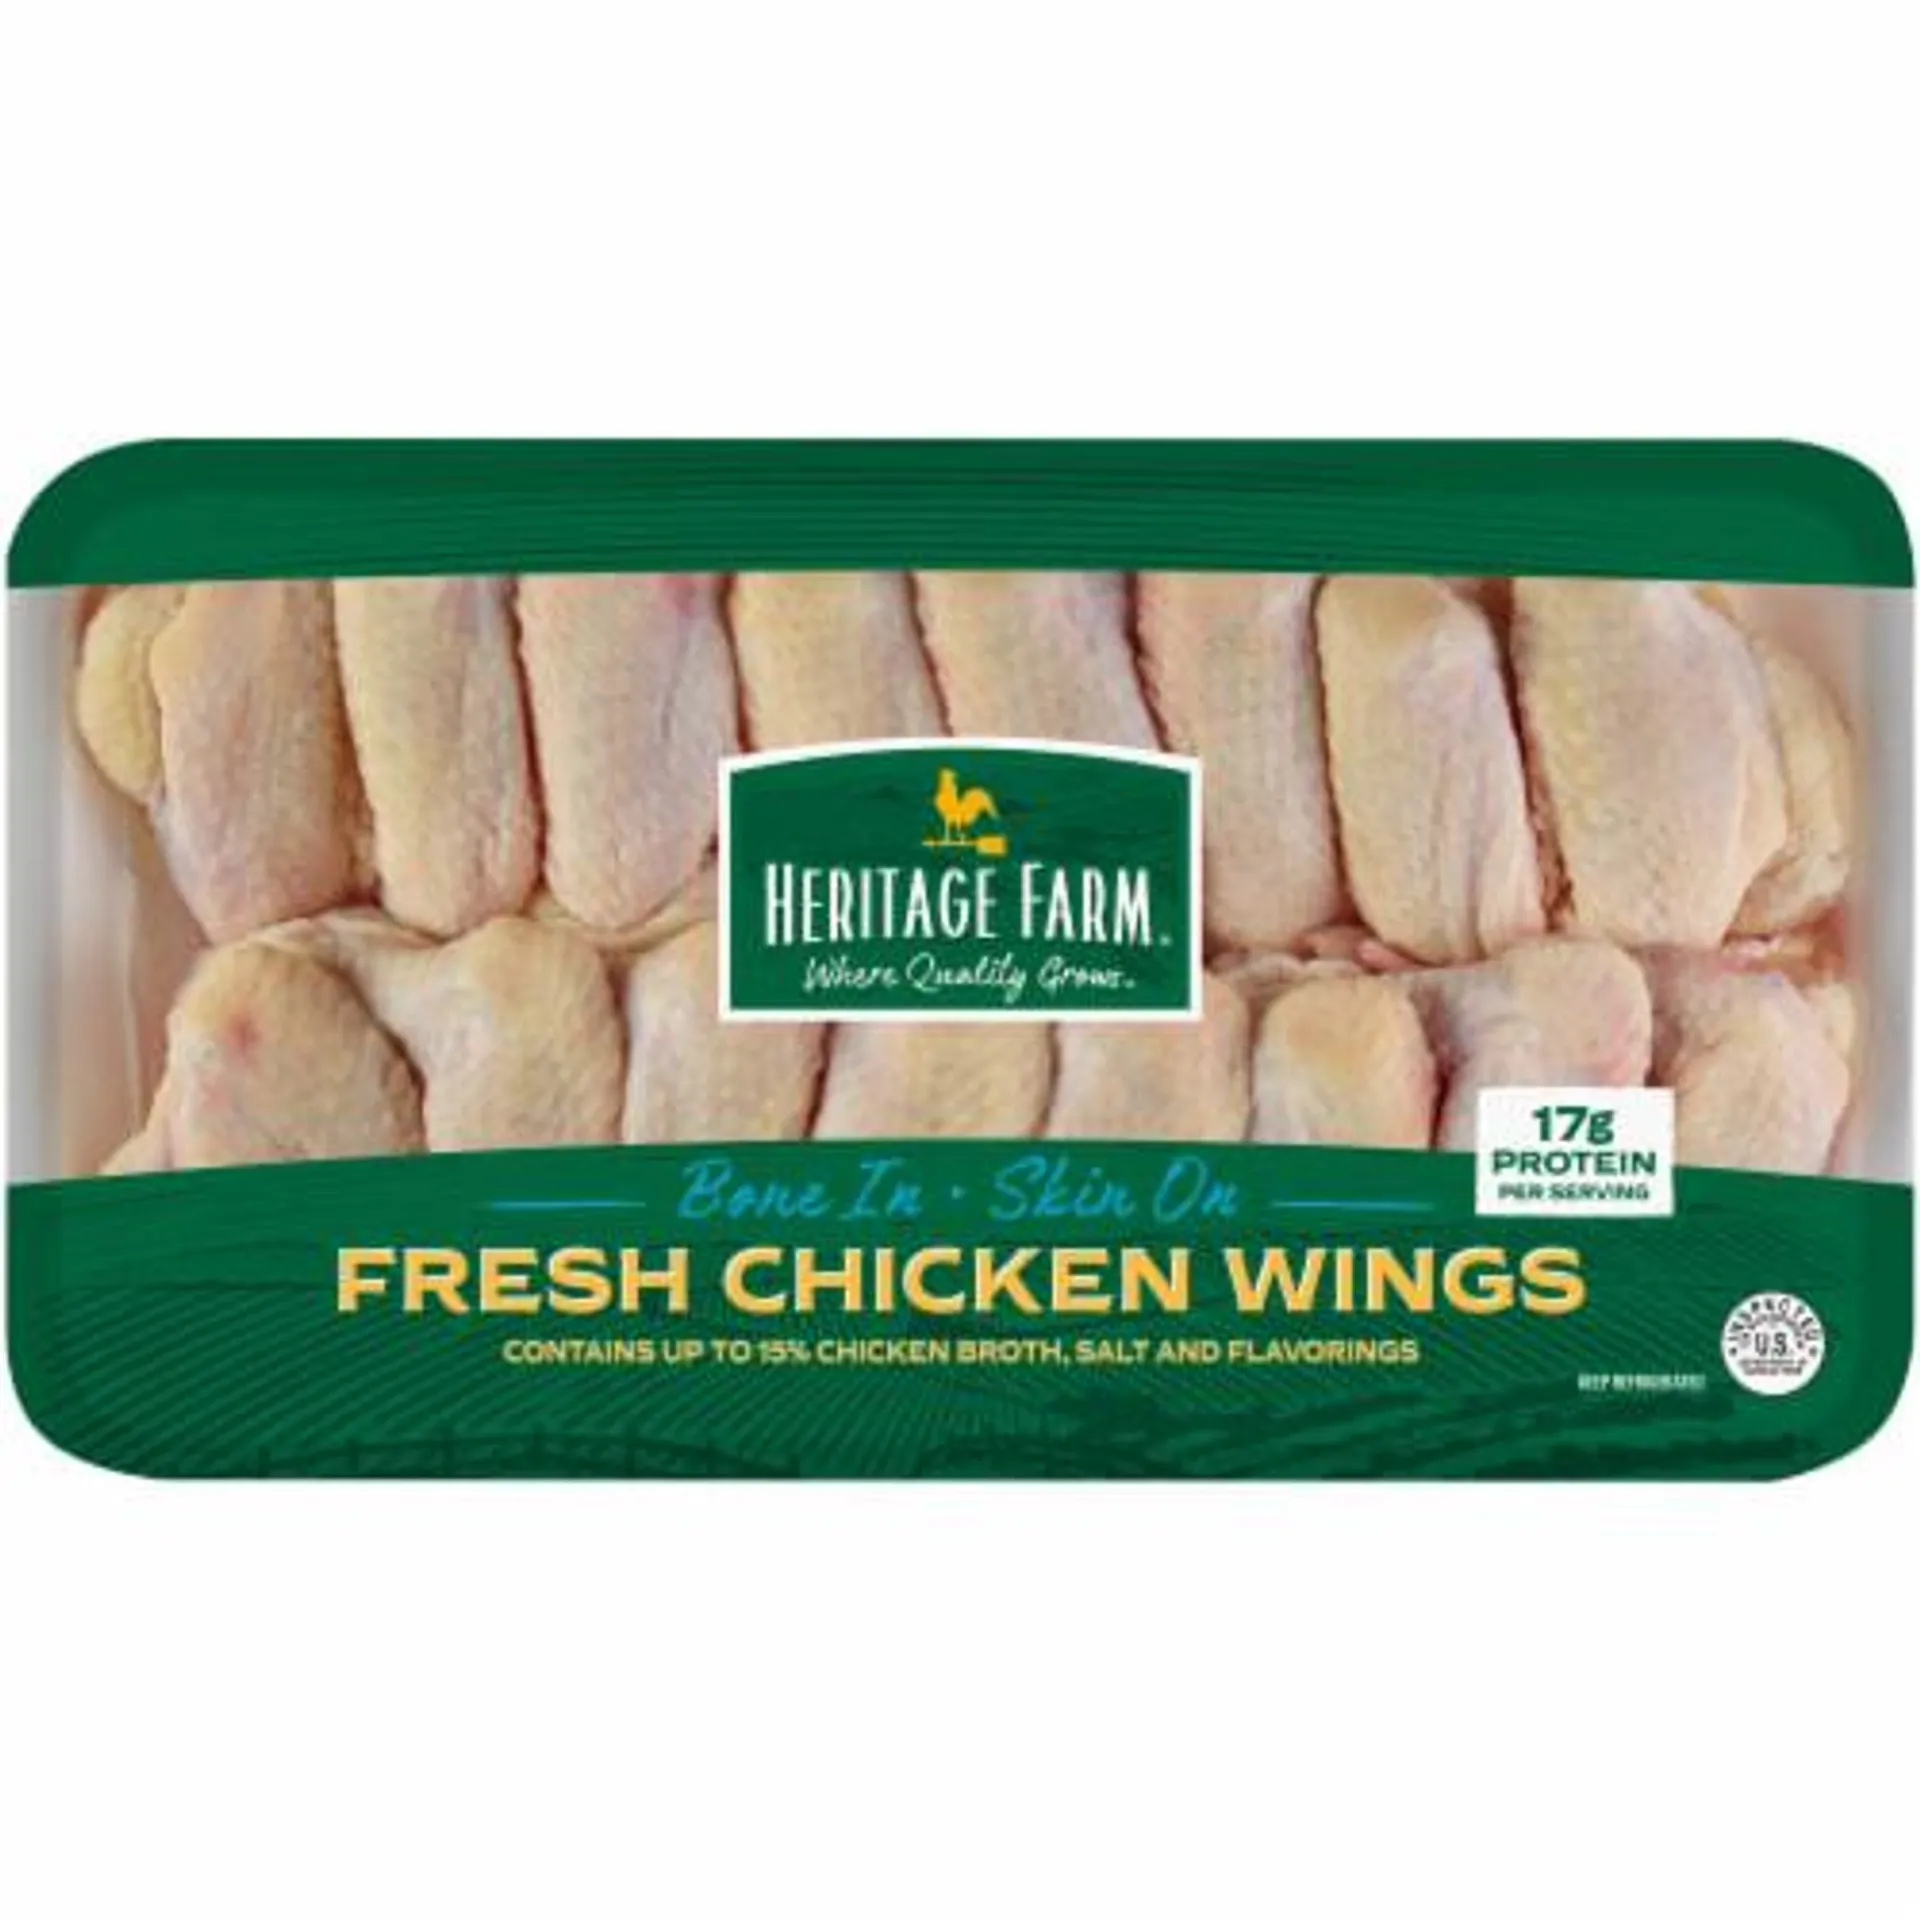 Heritage Farm® Chicken Wings Bone In & Skin On (14-17 per Pack)